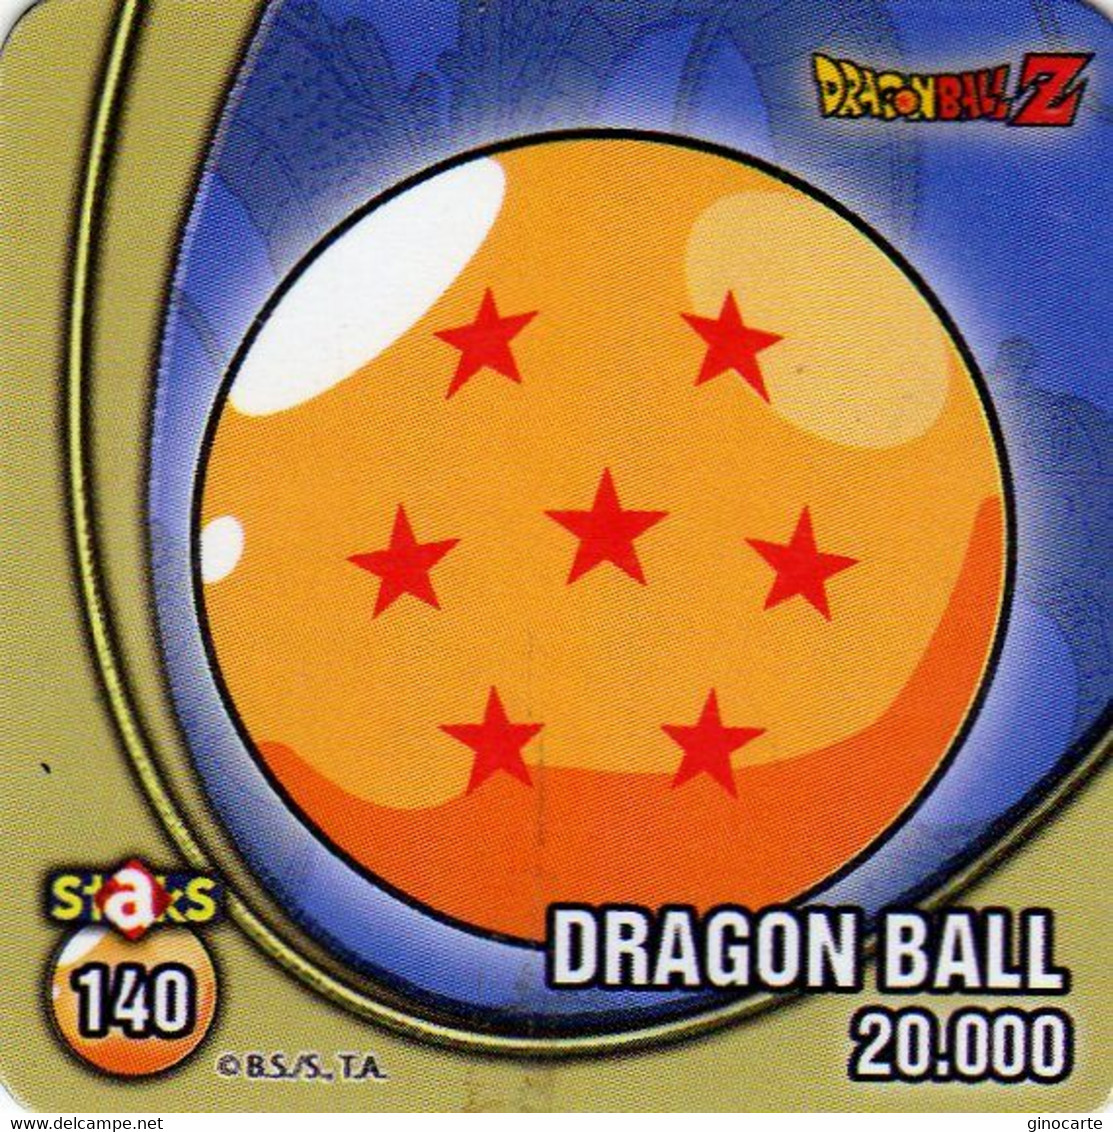 Magnets Magnet Stacks Dragon Ball Dragonball 140 - Personajes